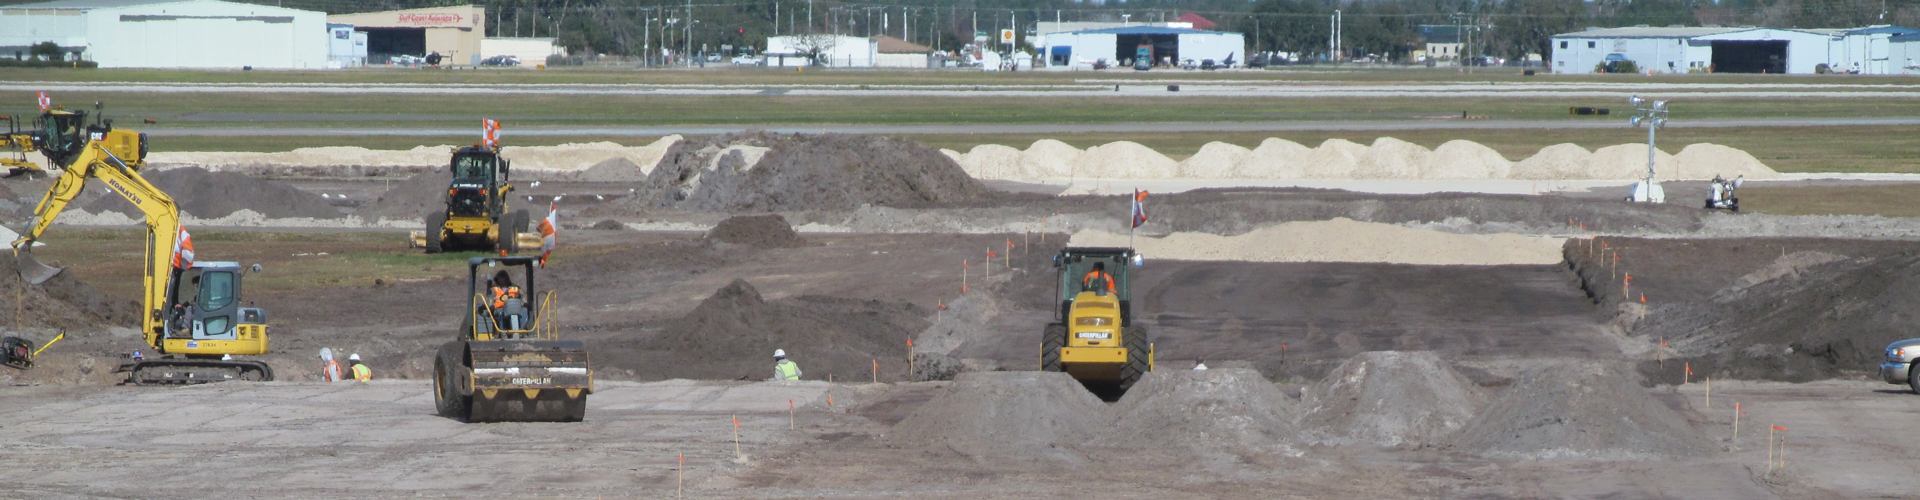 Construction work at Lakeland Airport